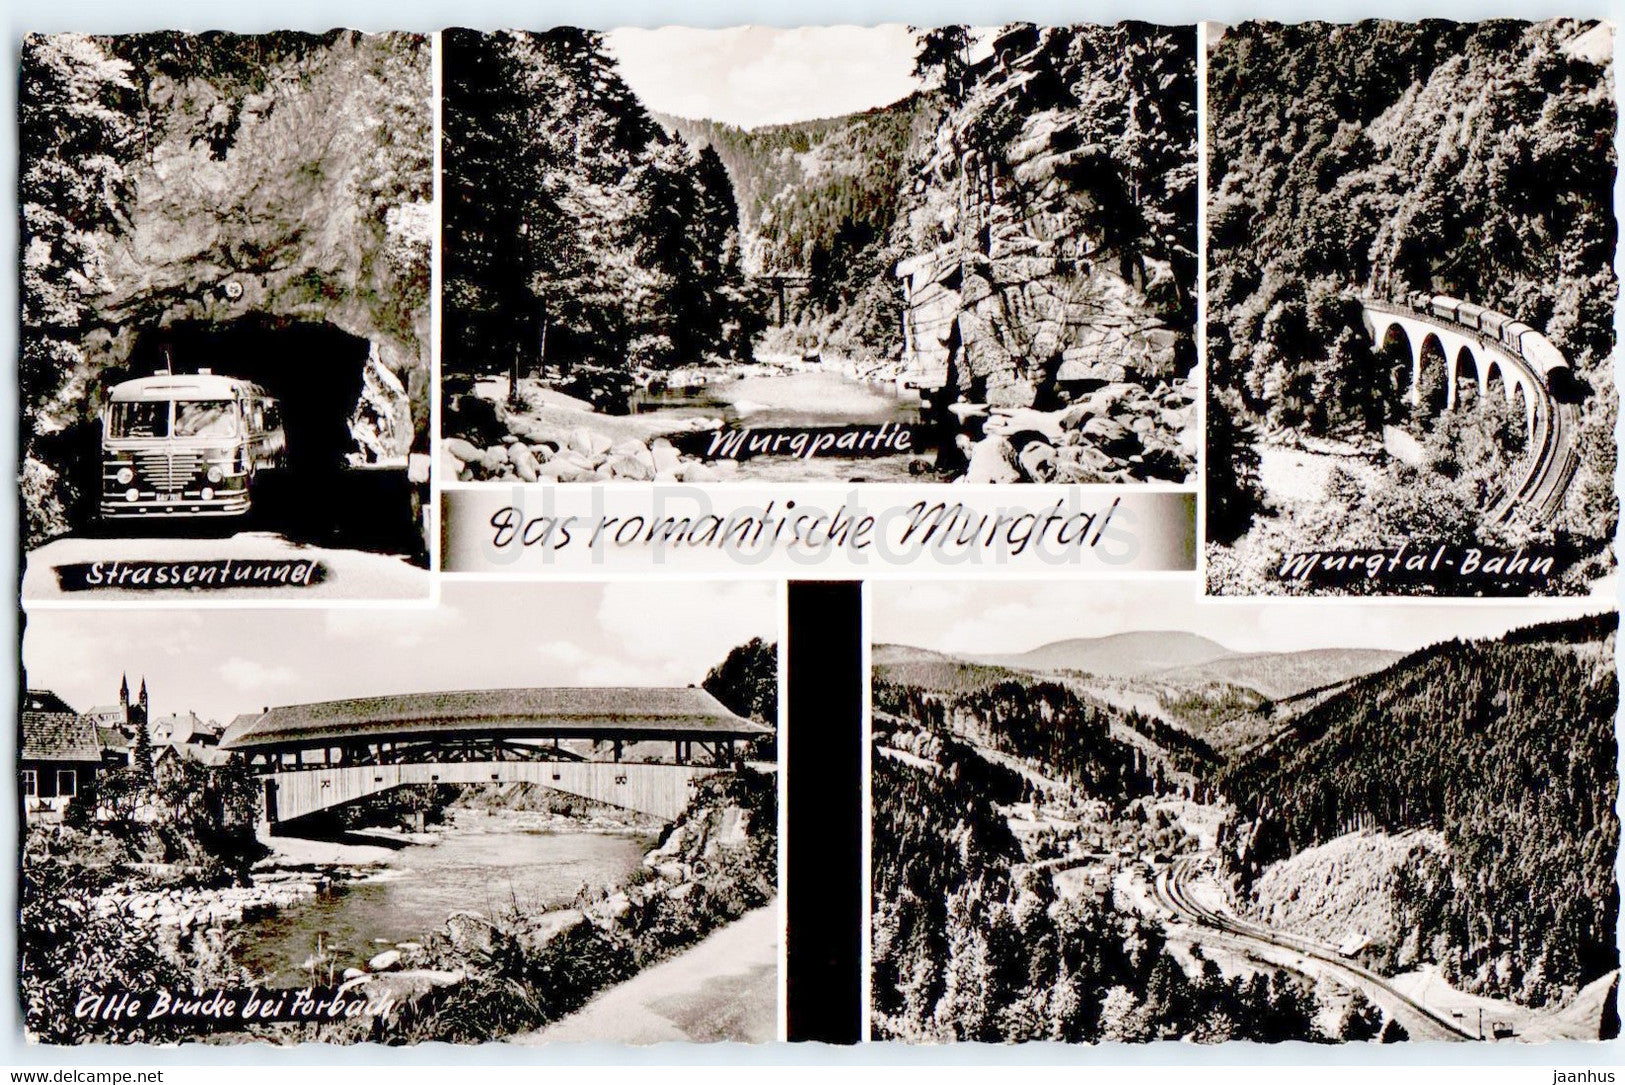 Das romantische Murgtal - Strassentunnel - Murgpartie - bus - old postcard - Germany - used - JH Postcards